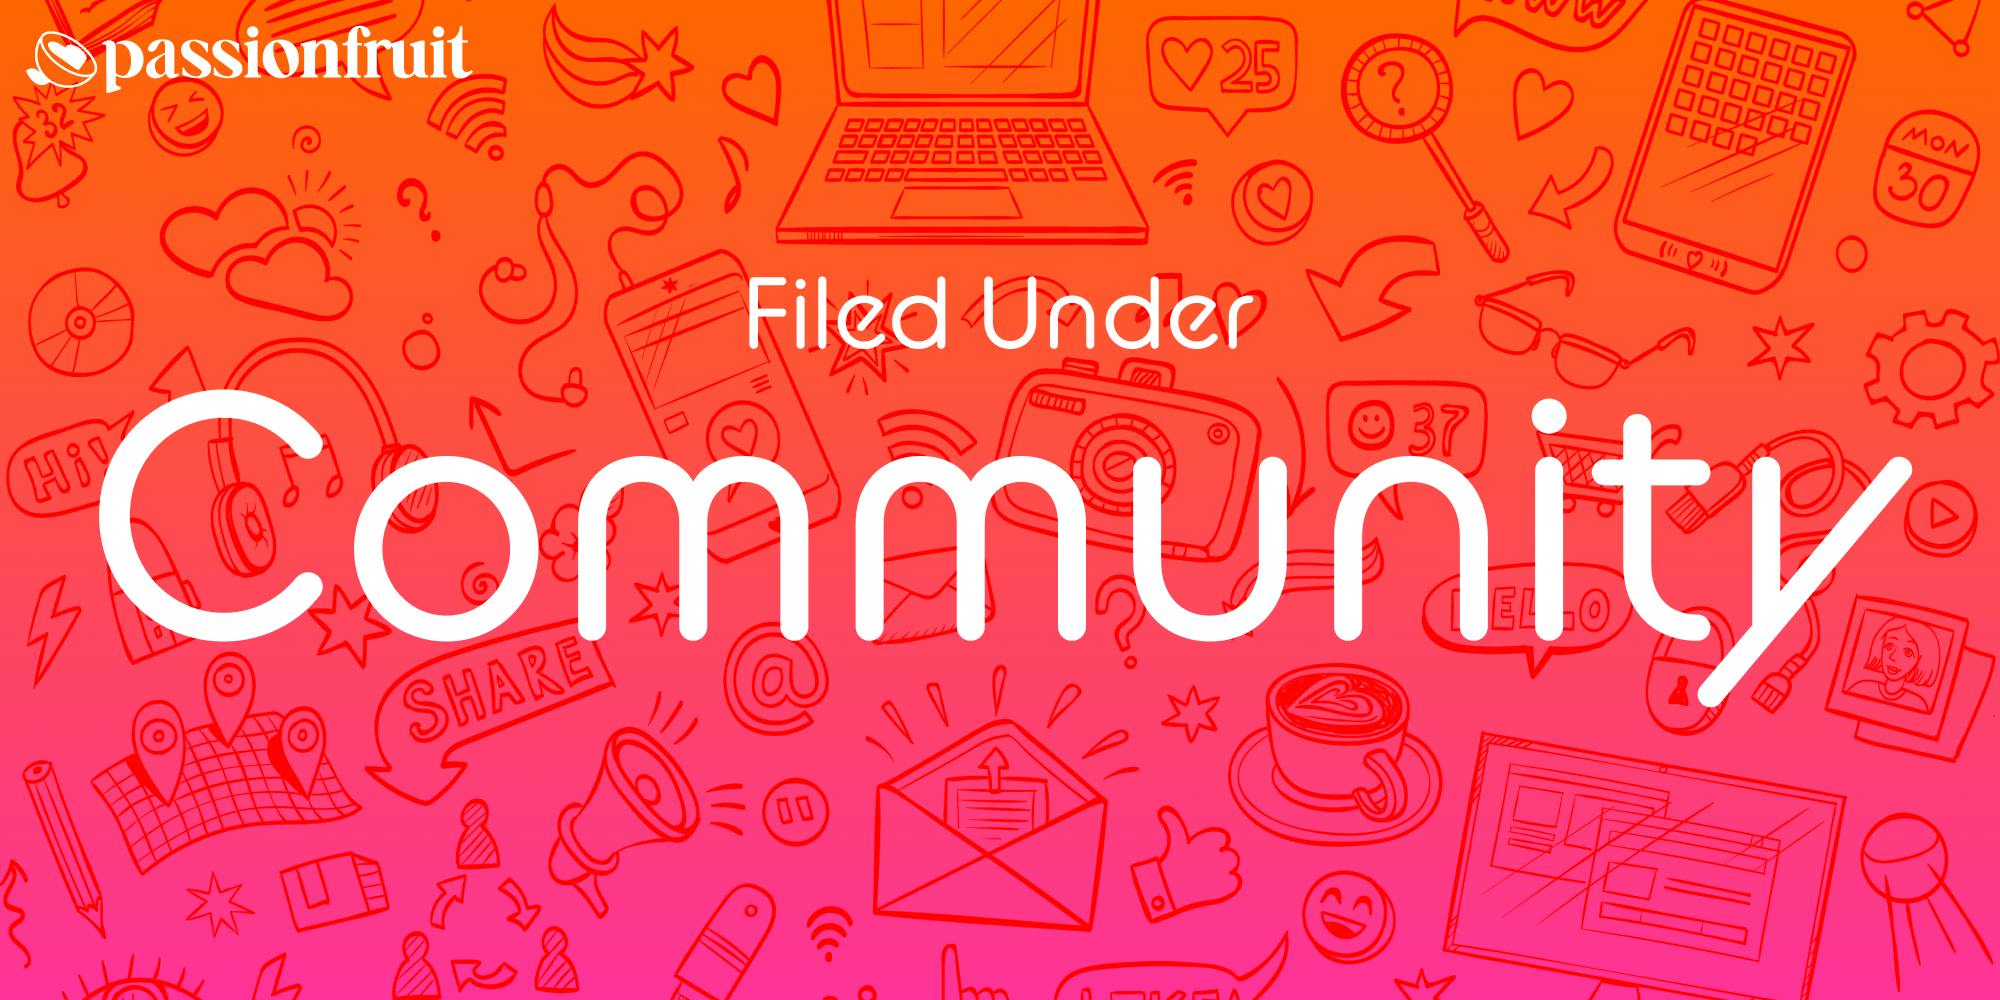 filed-under-community